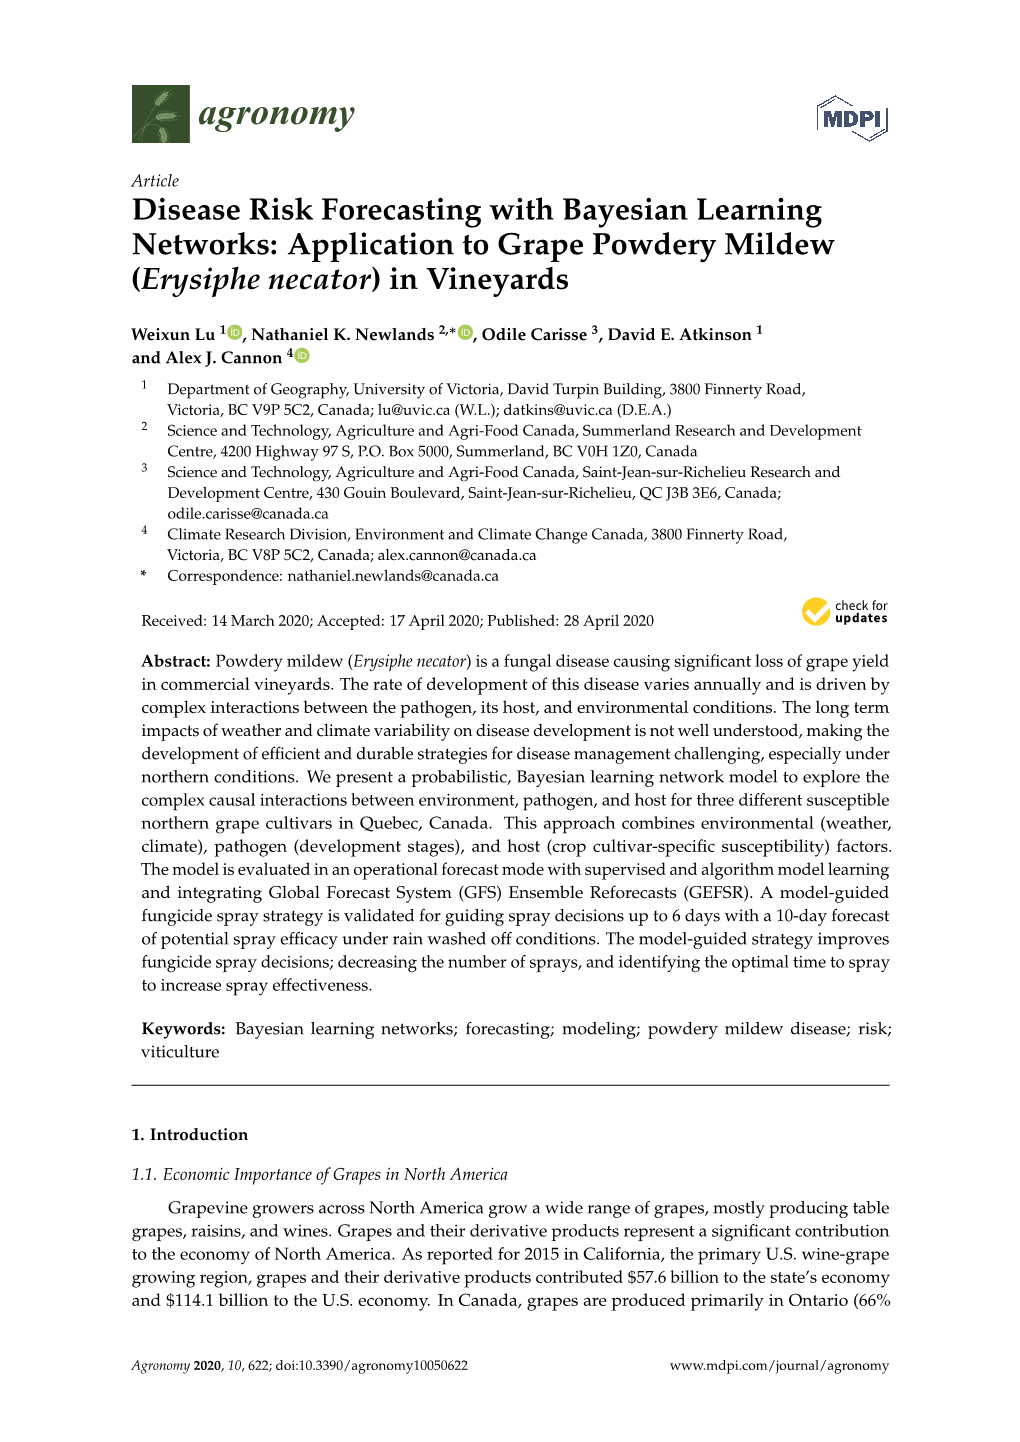 Application to Grape Powdery Mildew (Erysiphe Necator) in Vineyards